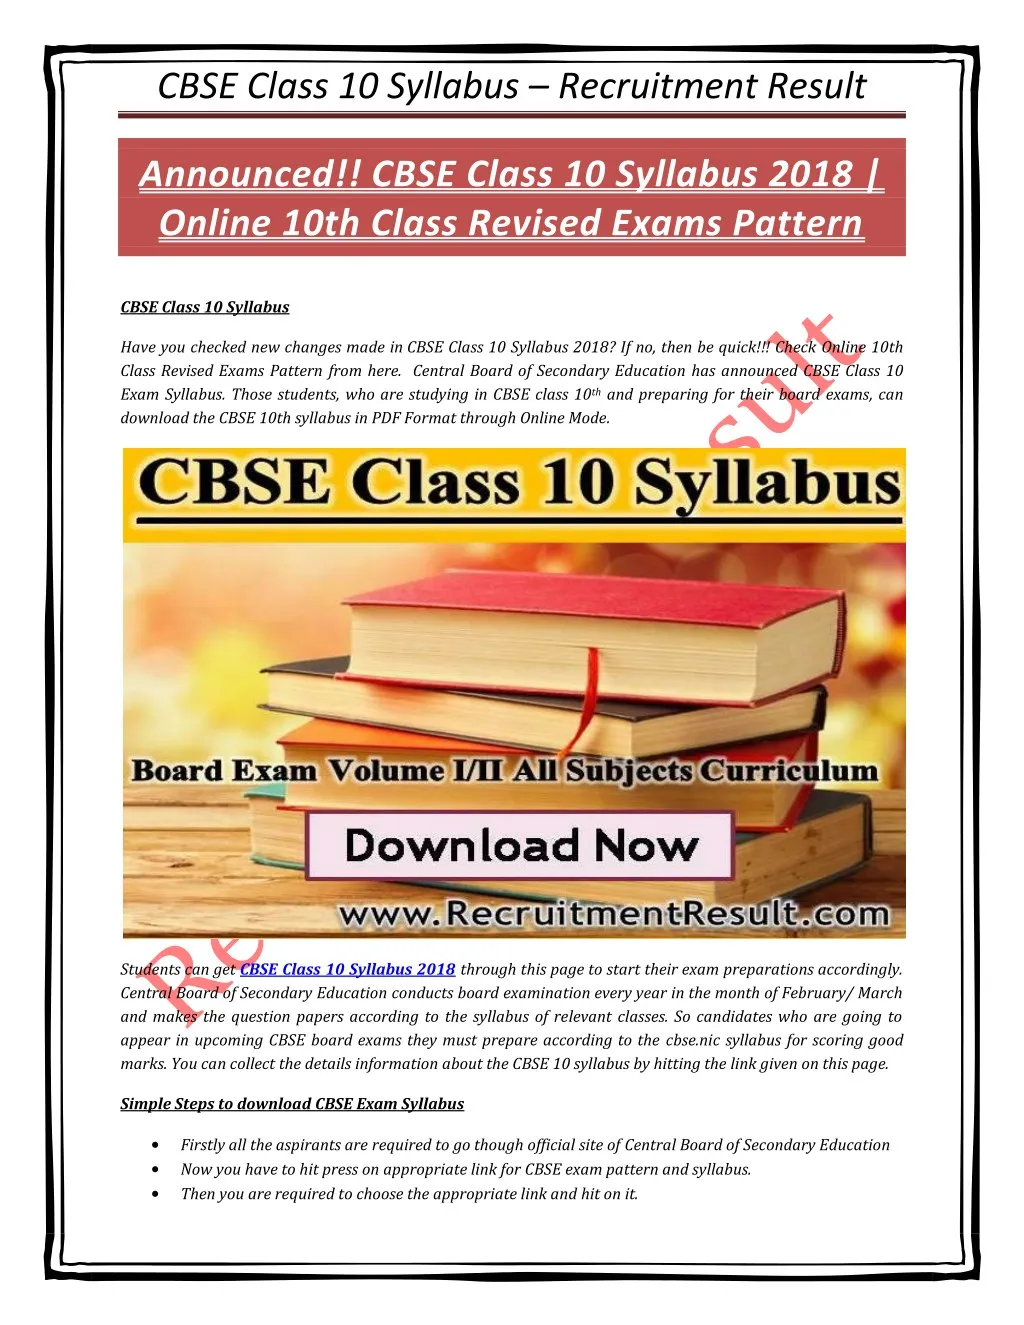 cbse class 10 syllabus recruitment result